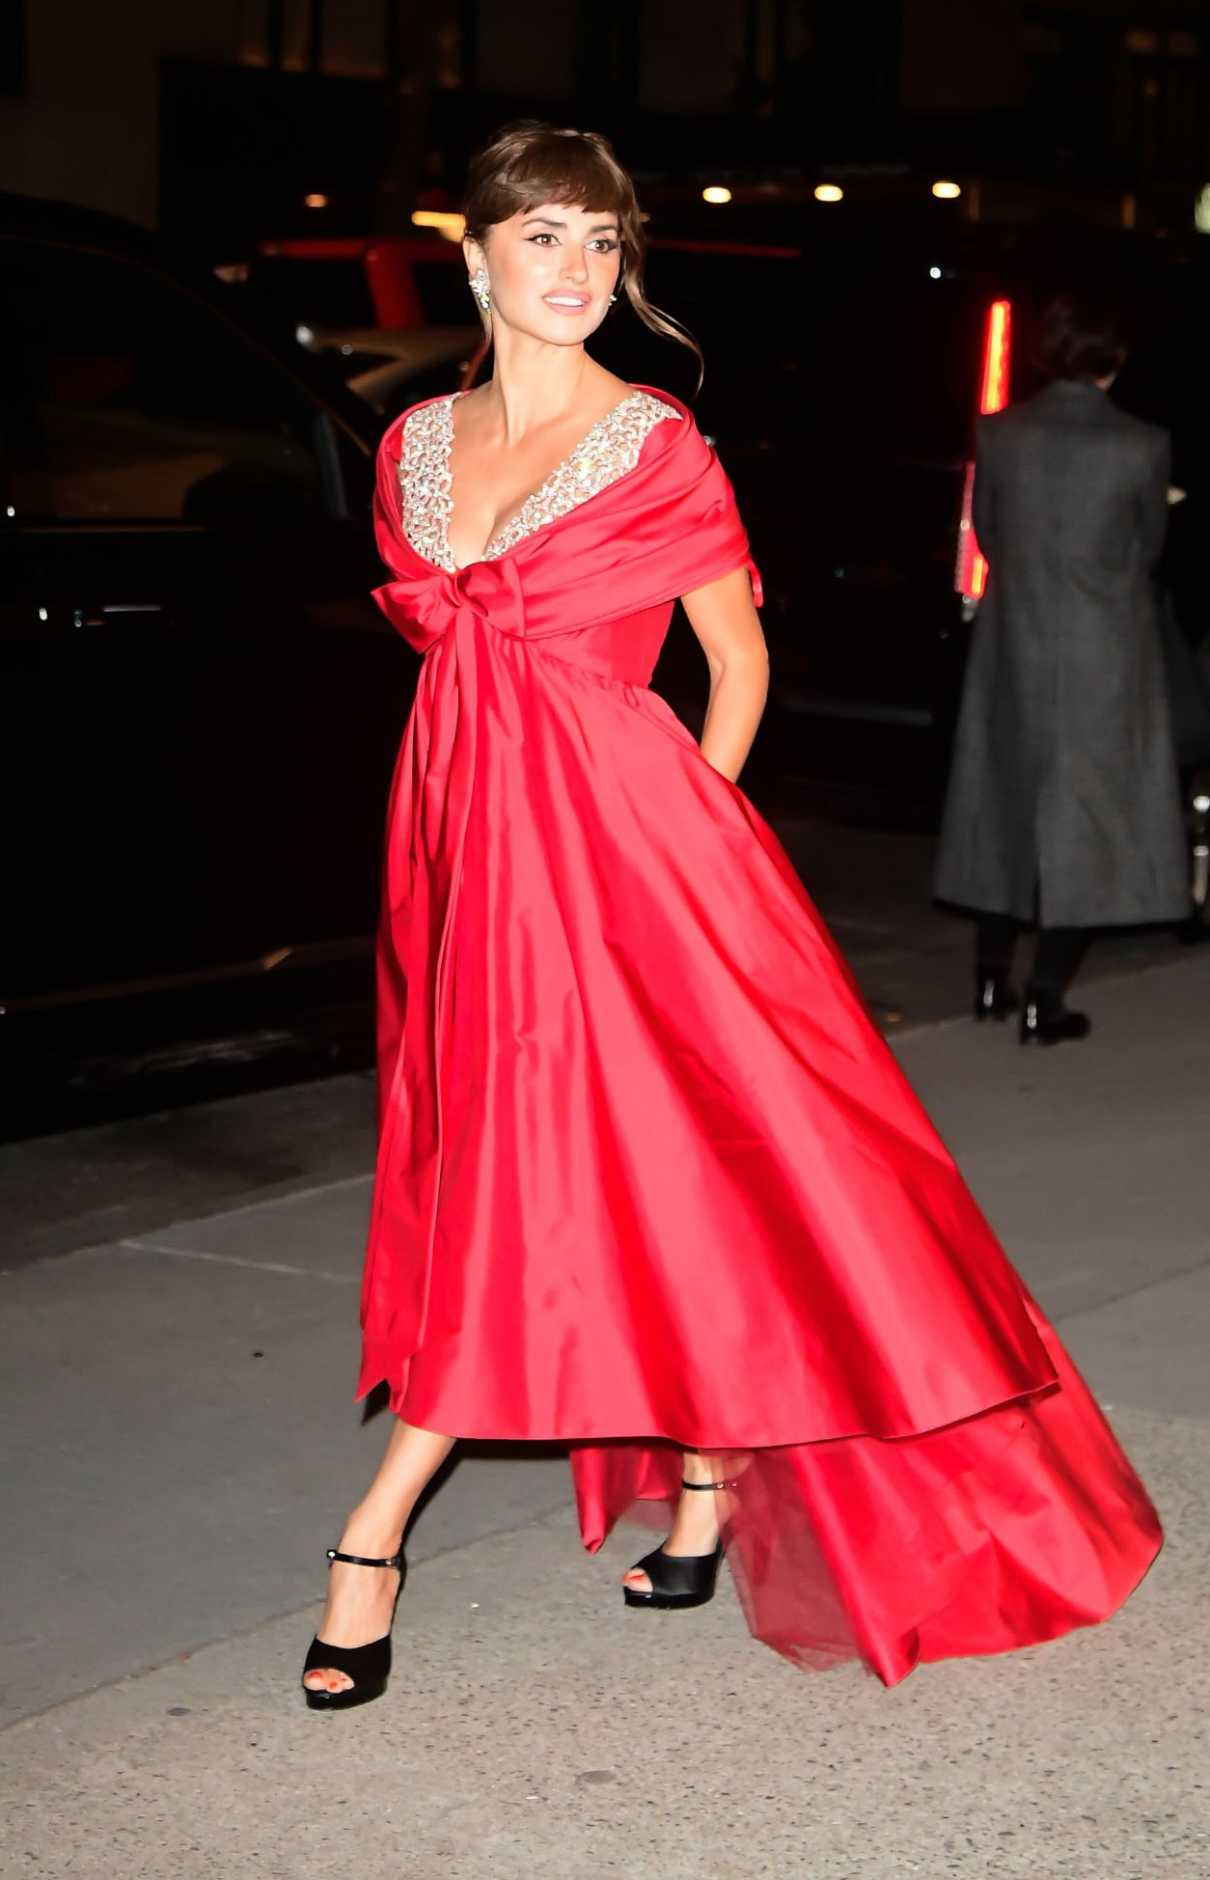 Penelope Cruz in a Red Dress